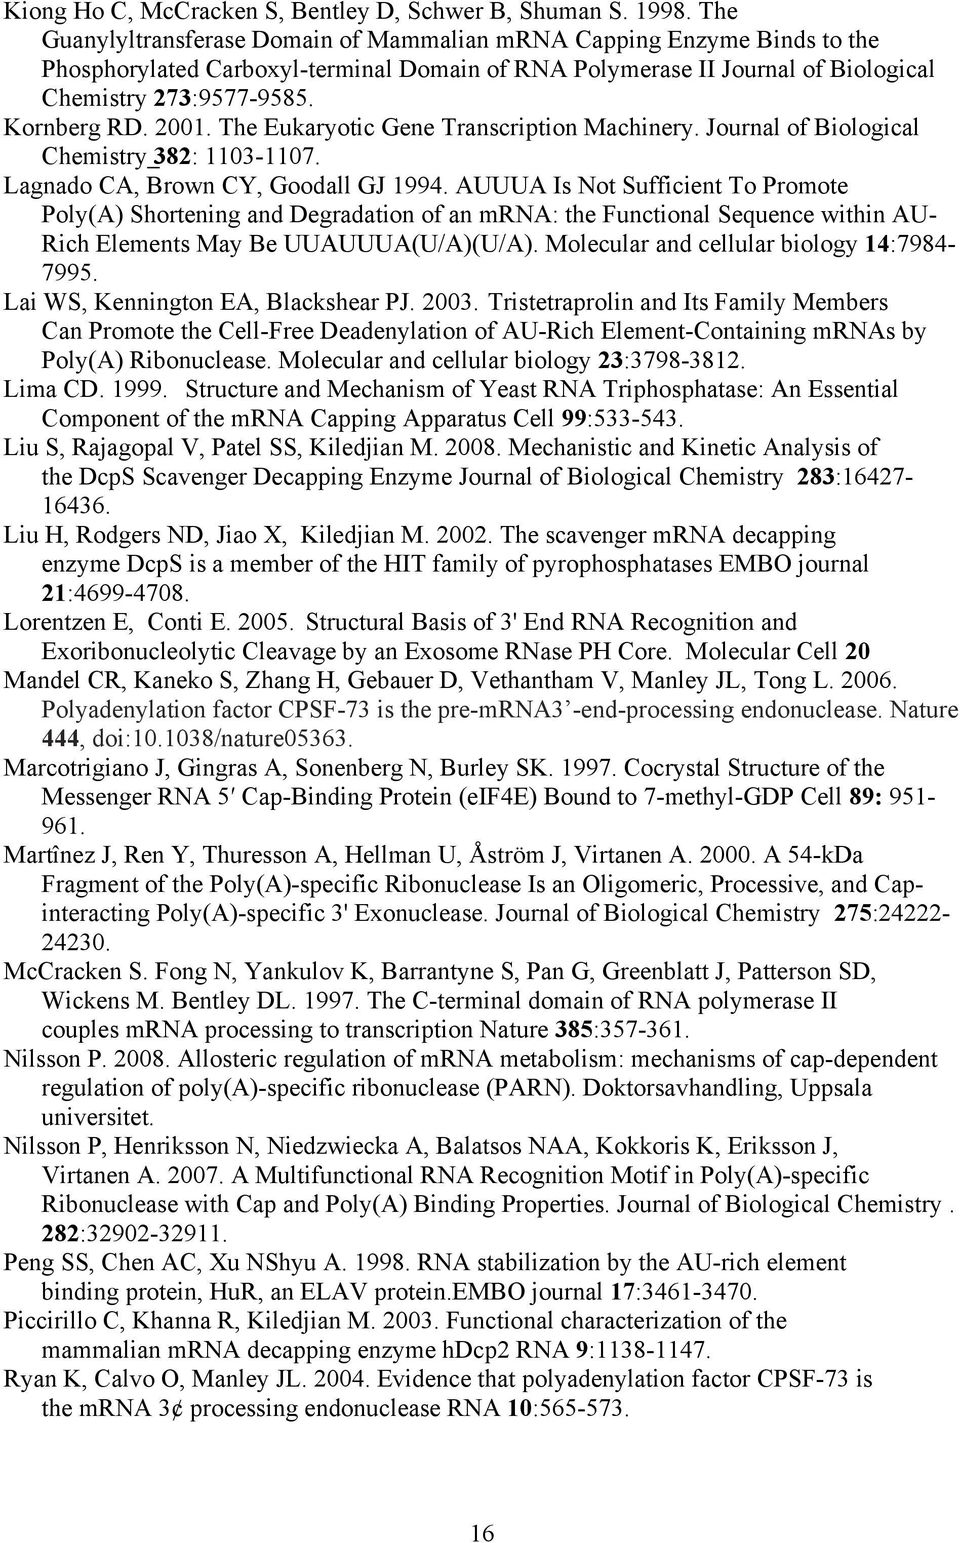 2001. The Eukaryotic Gene Transcription Machinery. Journal of Biological Chemistry 382: 1103-1107. Lagnado CA, Brown CY, Goodall GJ 1994.